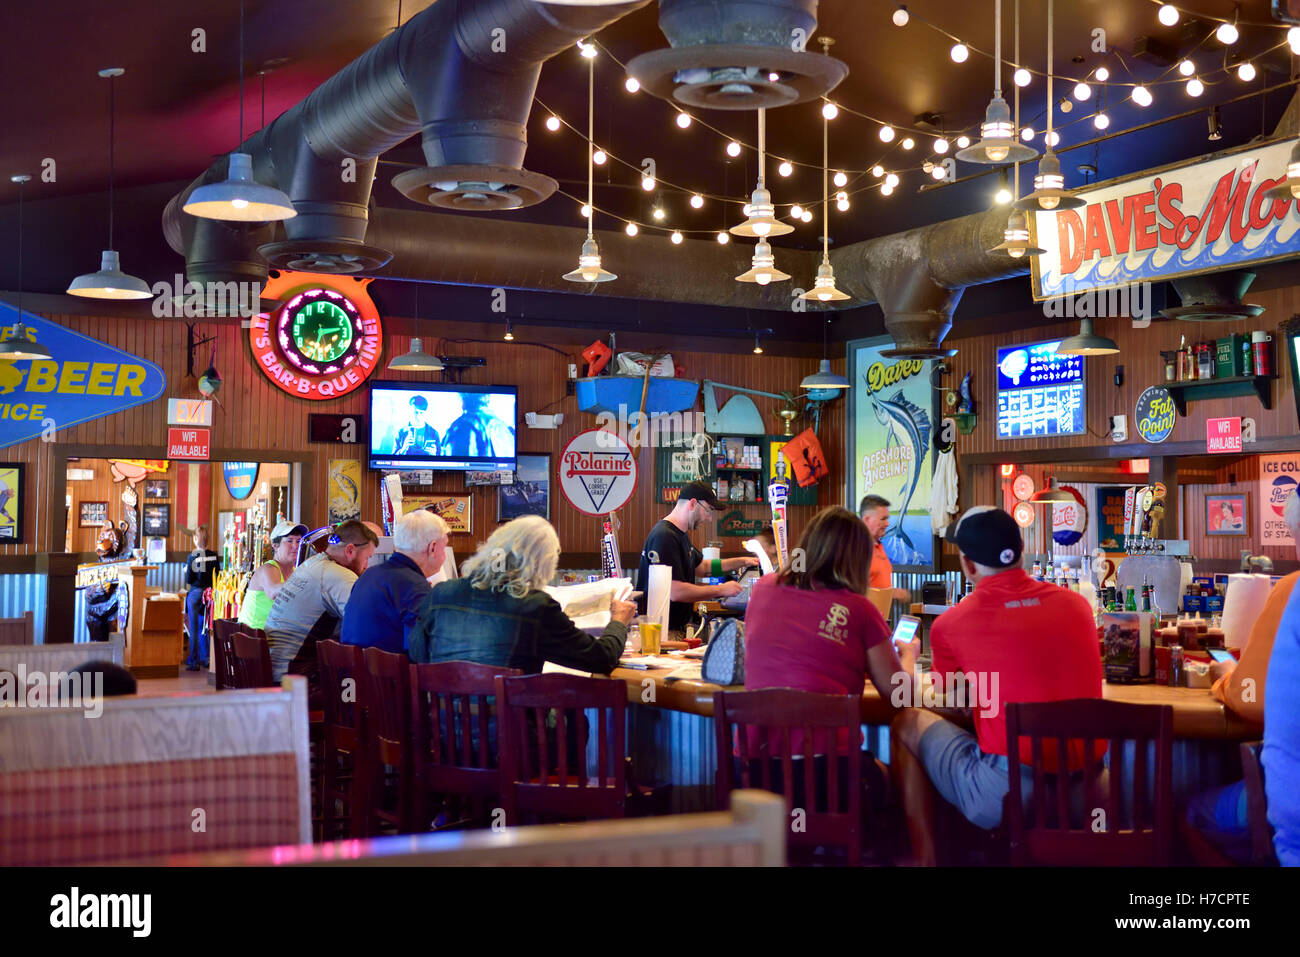 Inside Famous Dave's Bar-B-Que restaurant, Fort Myers, FL Stock Photo